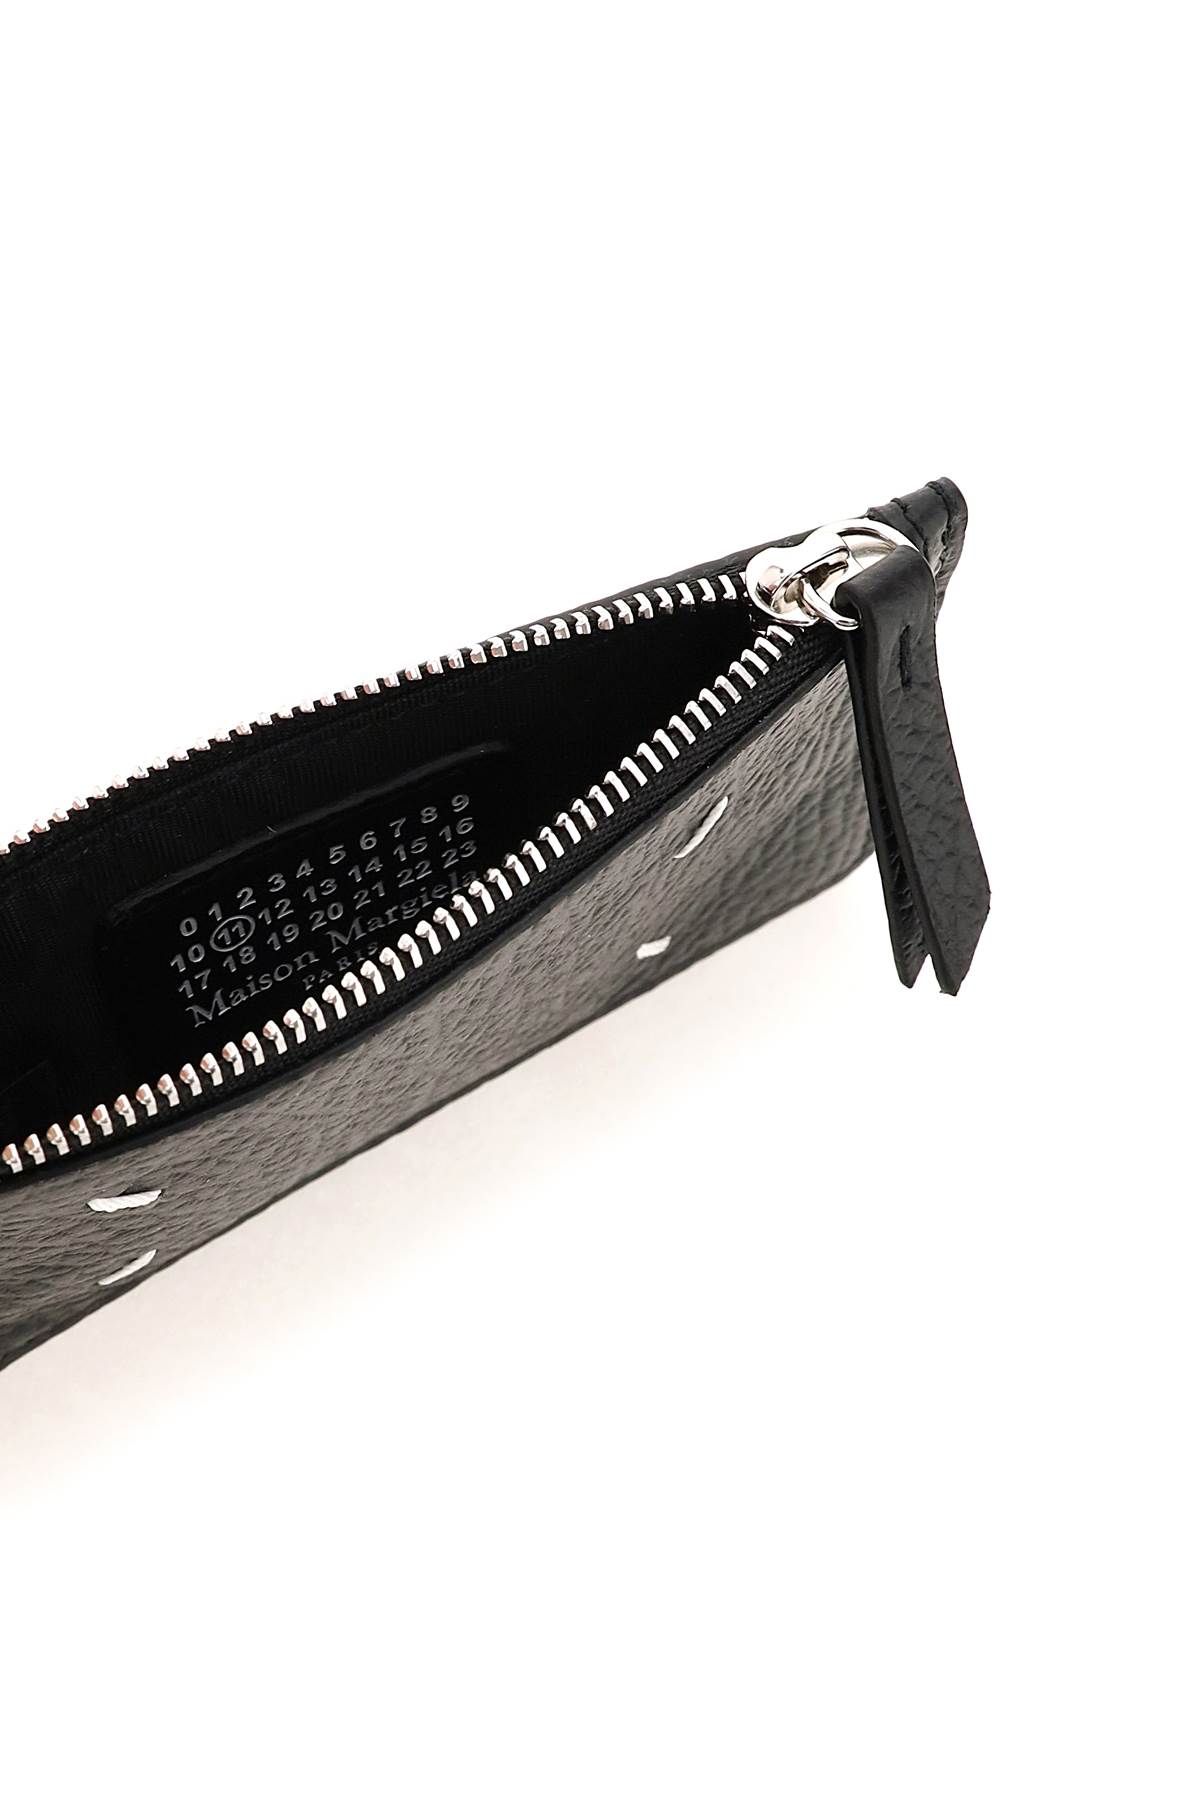 Shop Maison Margiela Leather Zipped Cardholder In Black